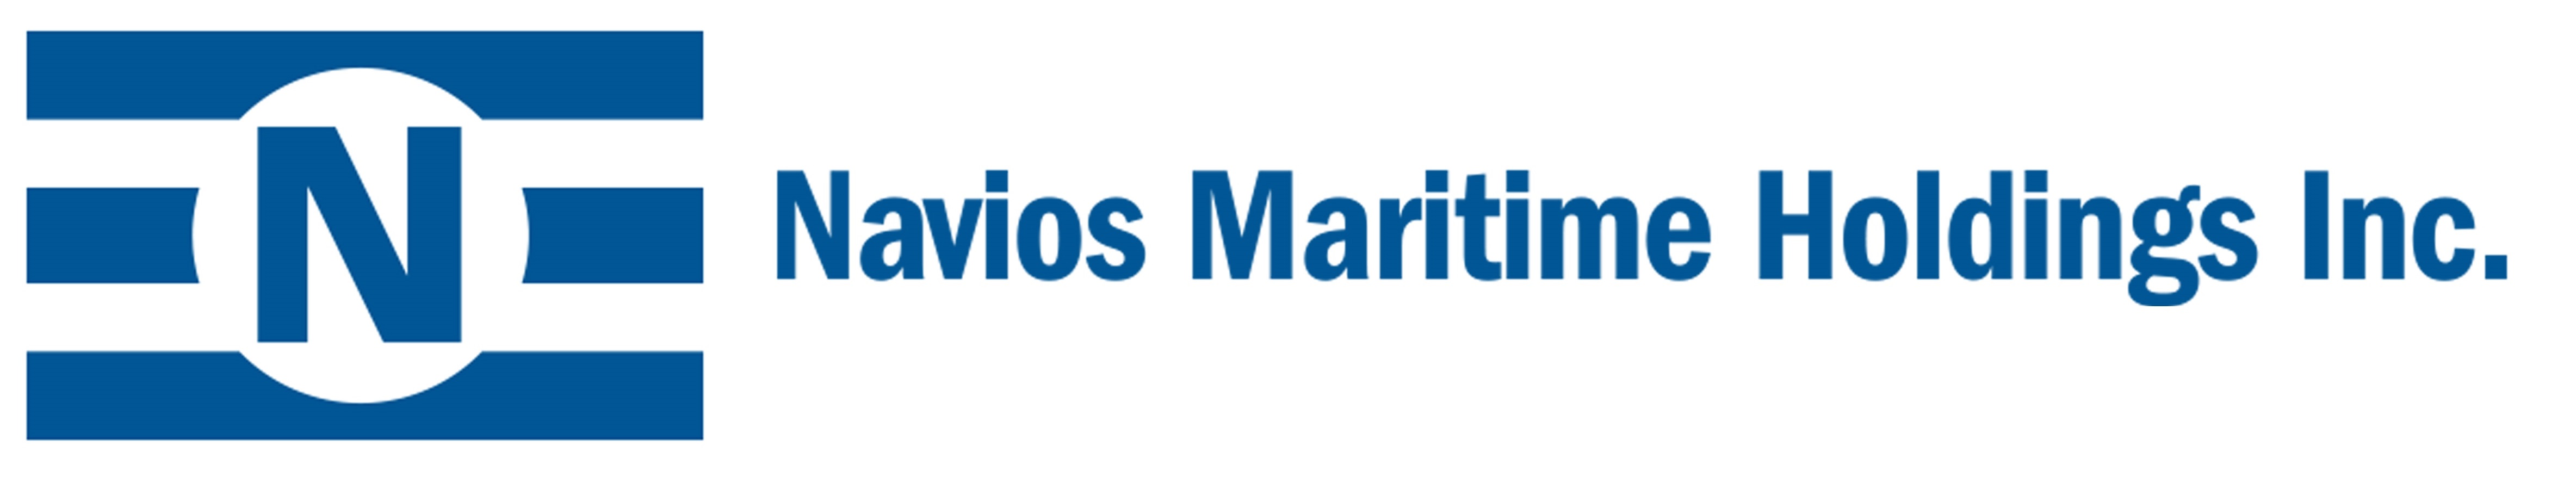 Navios Maritime Holdings Inc. Announces Entry Into New Senior Secured Term Loan Facility - GlobeNewswire